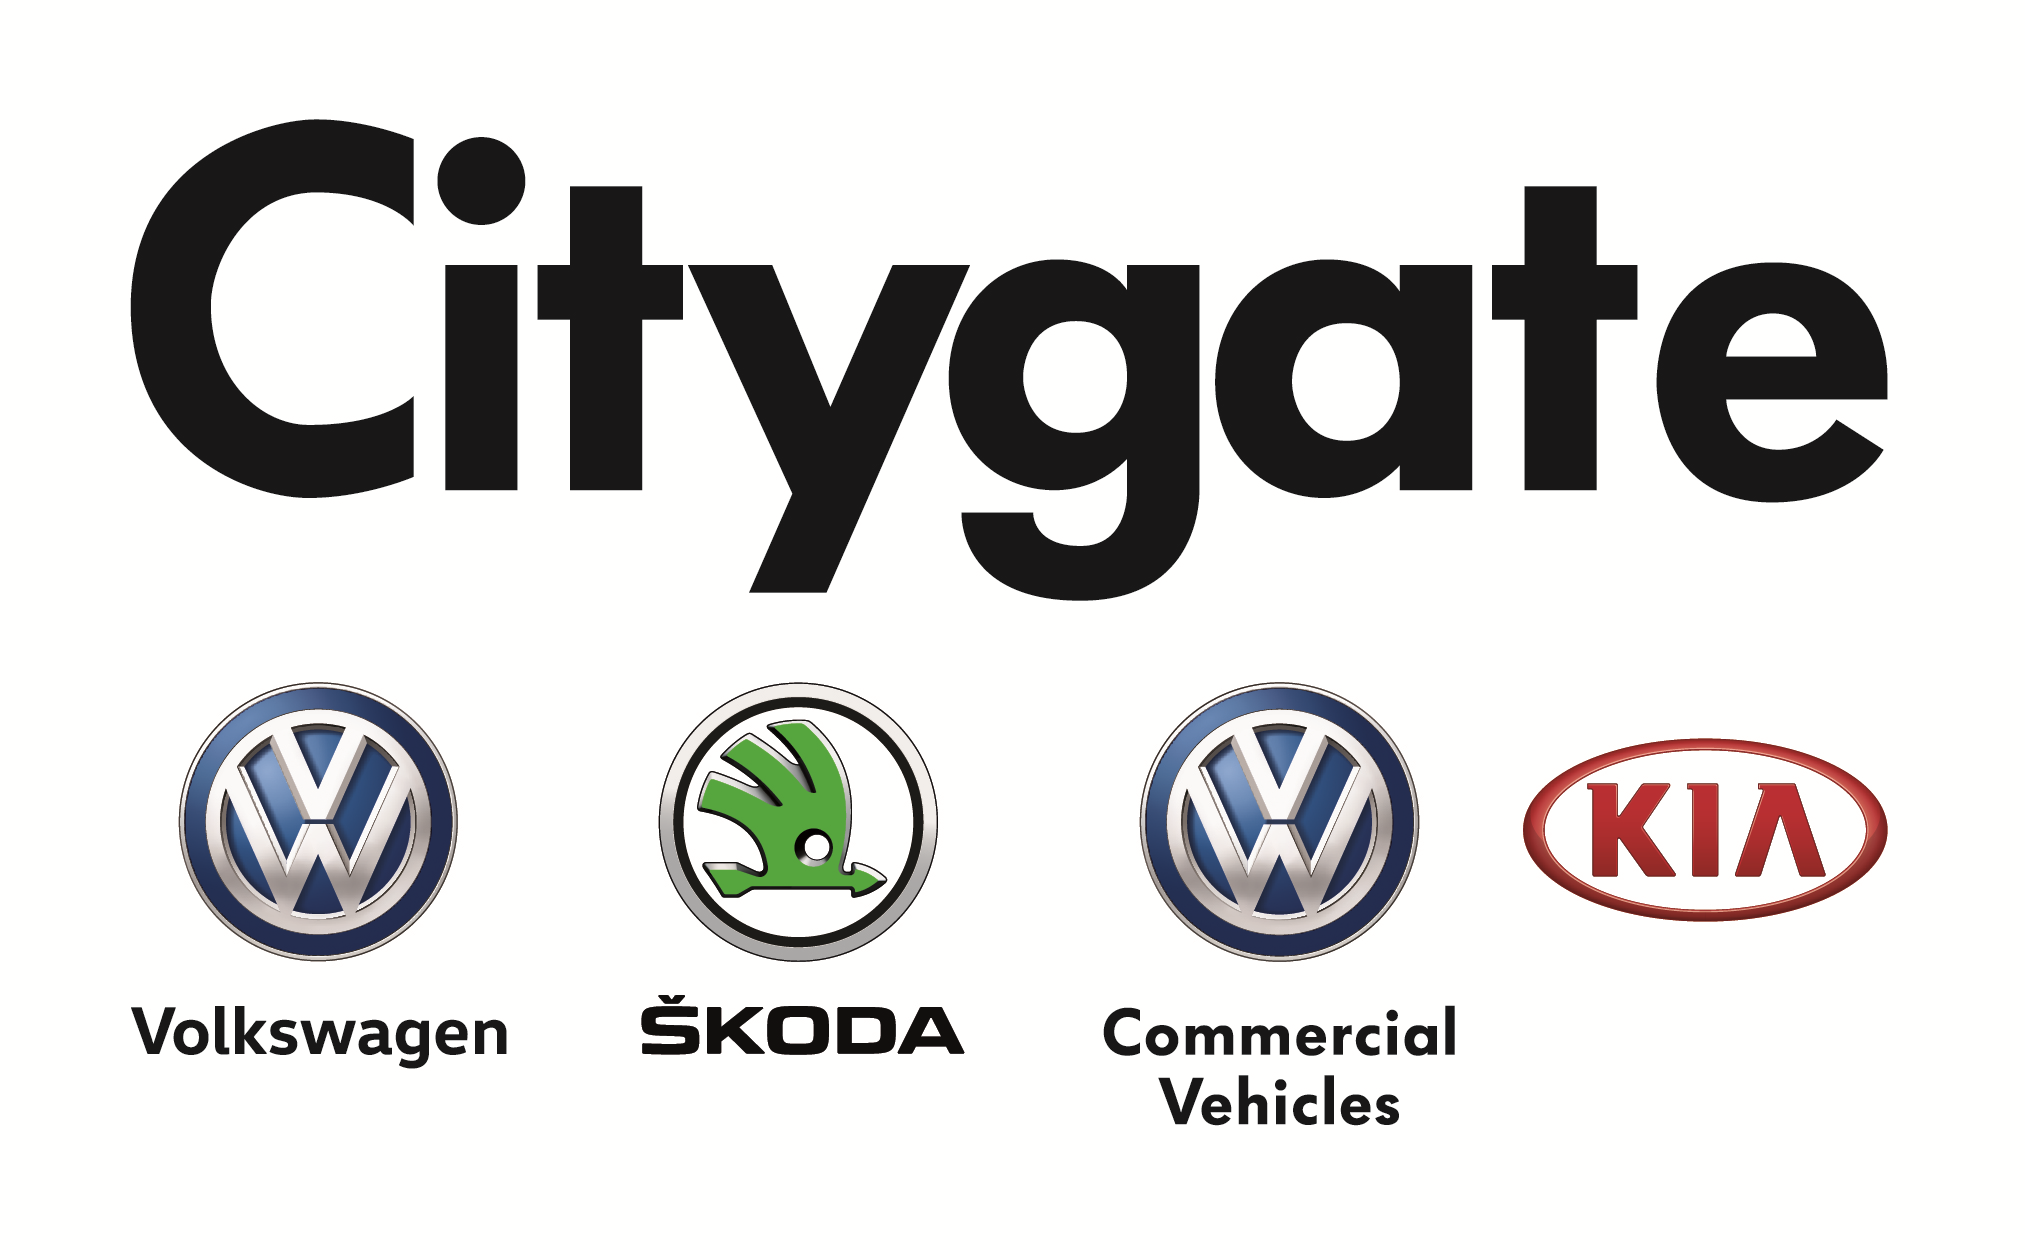 Citygate Colindale logo